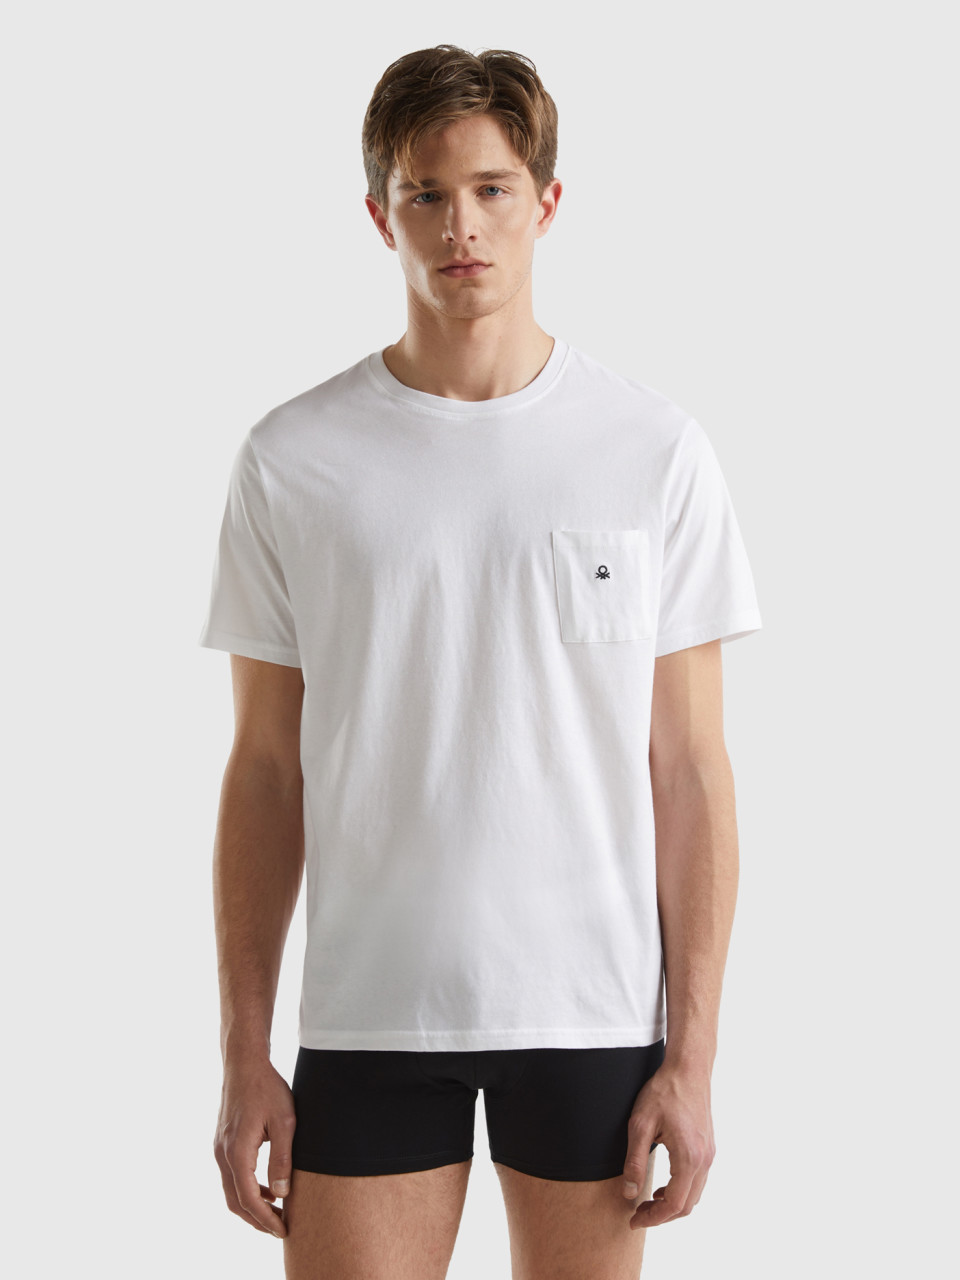 Benetton, T-shirt With Pocket, White, Men